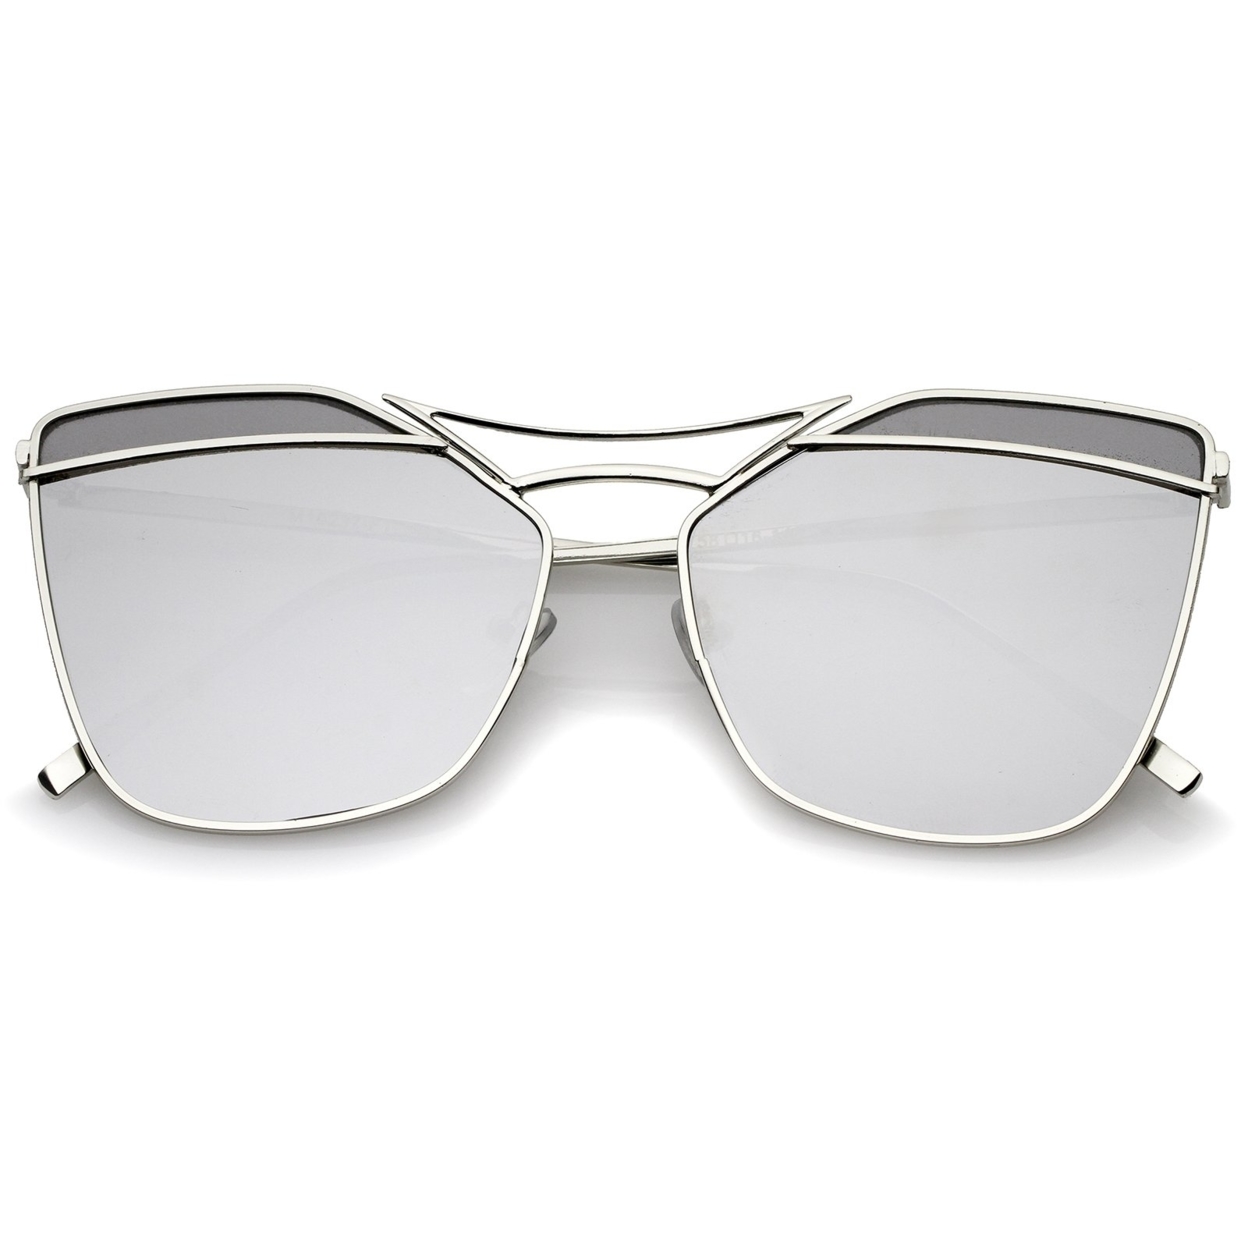 Modern Metal Double Nose Bridge Mirror Flat Lens Square Sunglasses 56mm - Silver / Blue Mirror